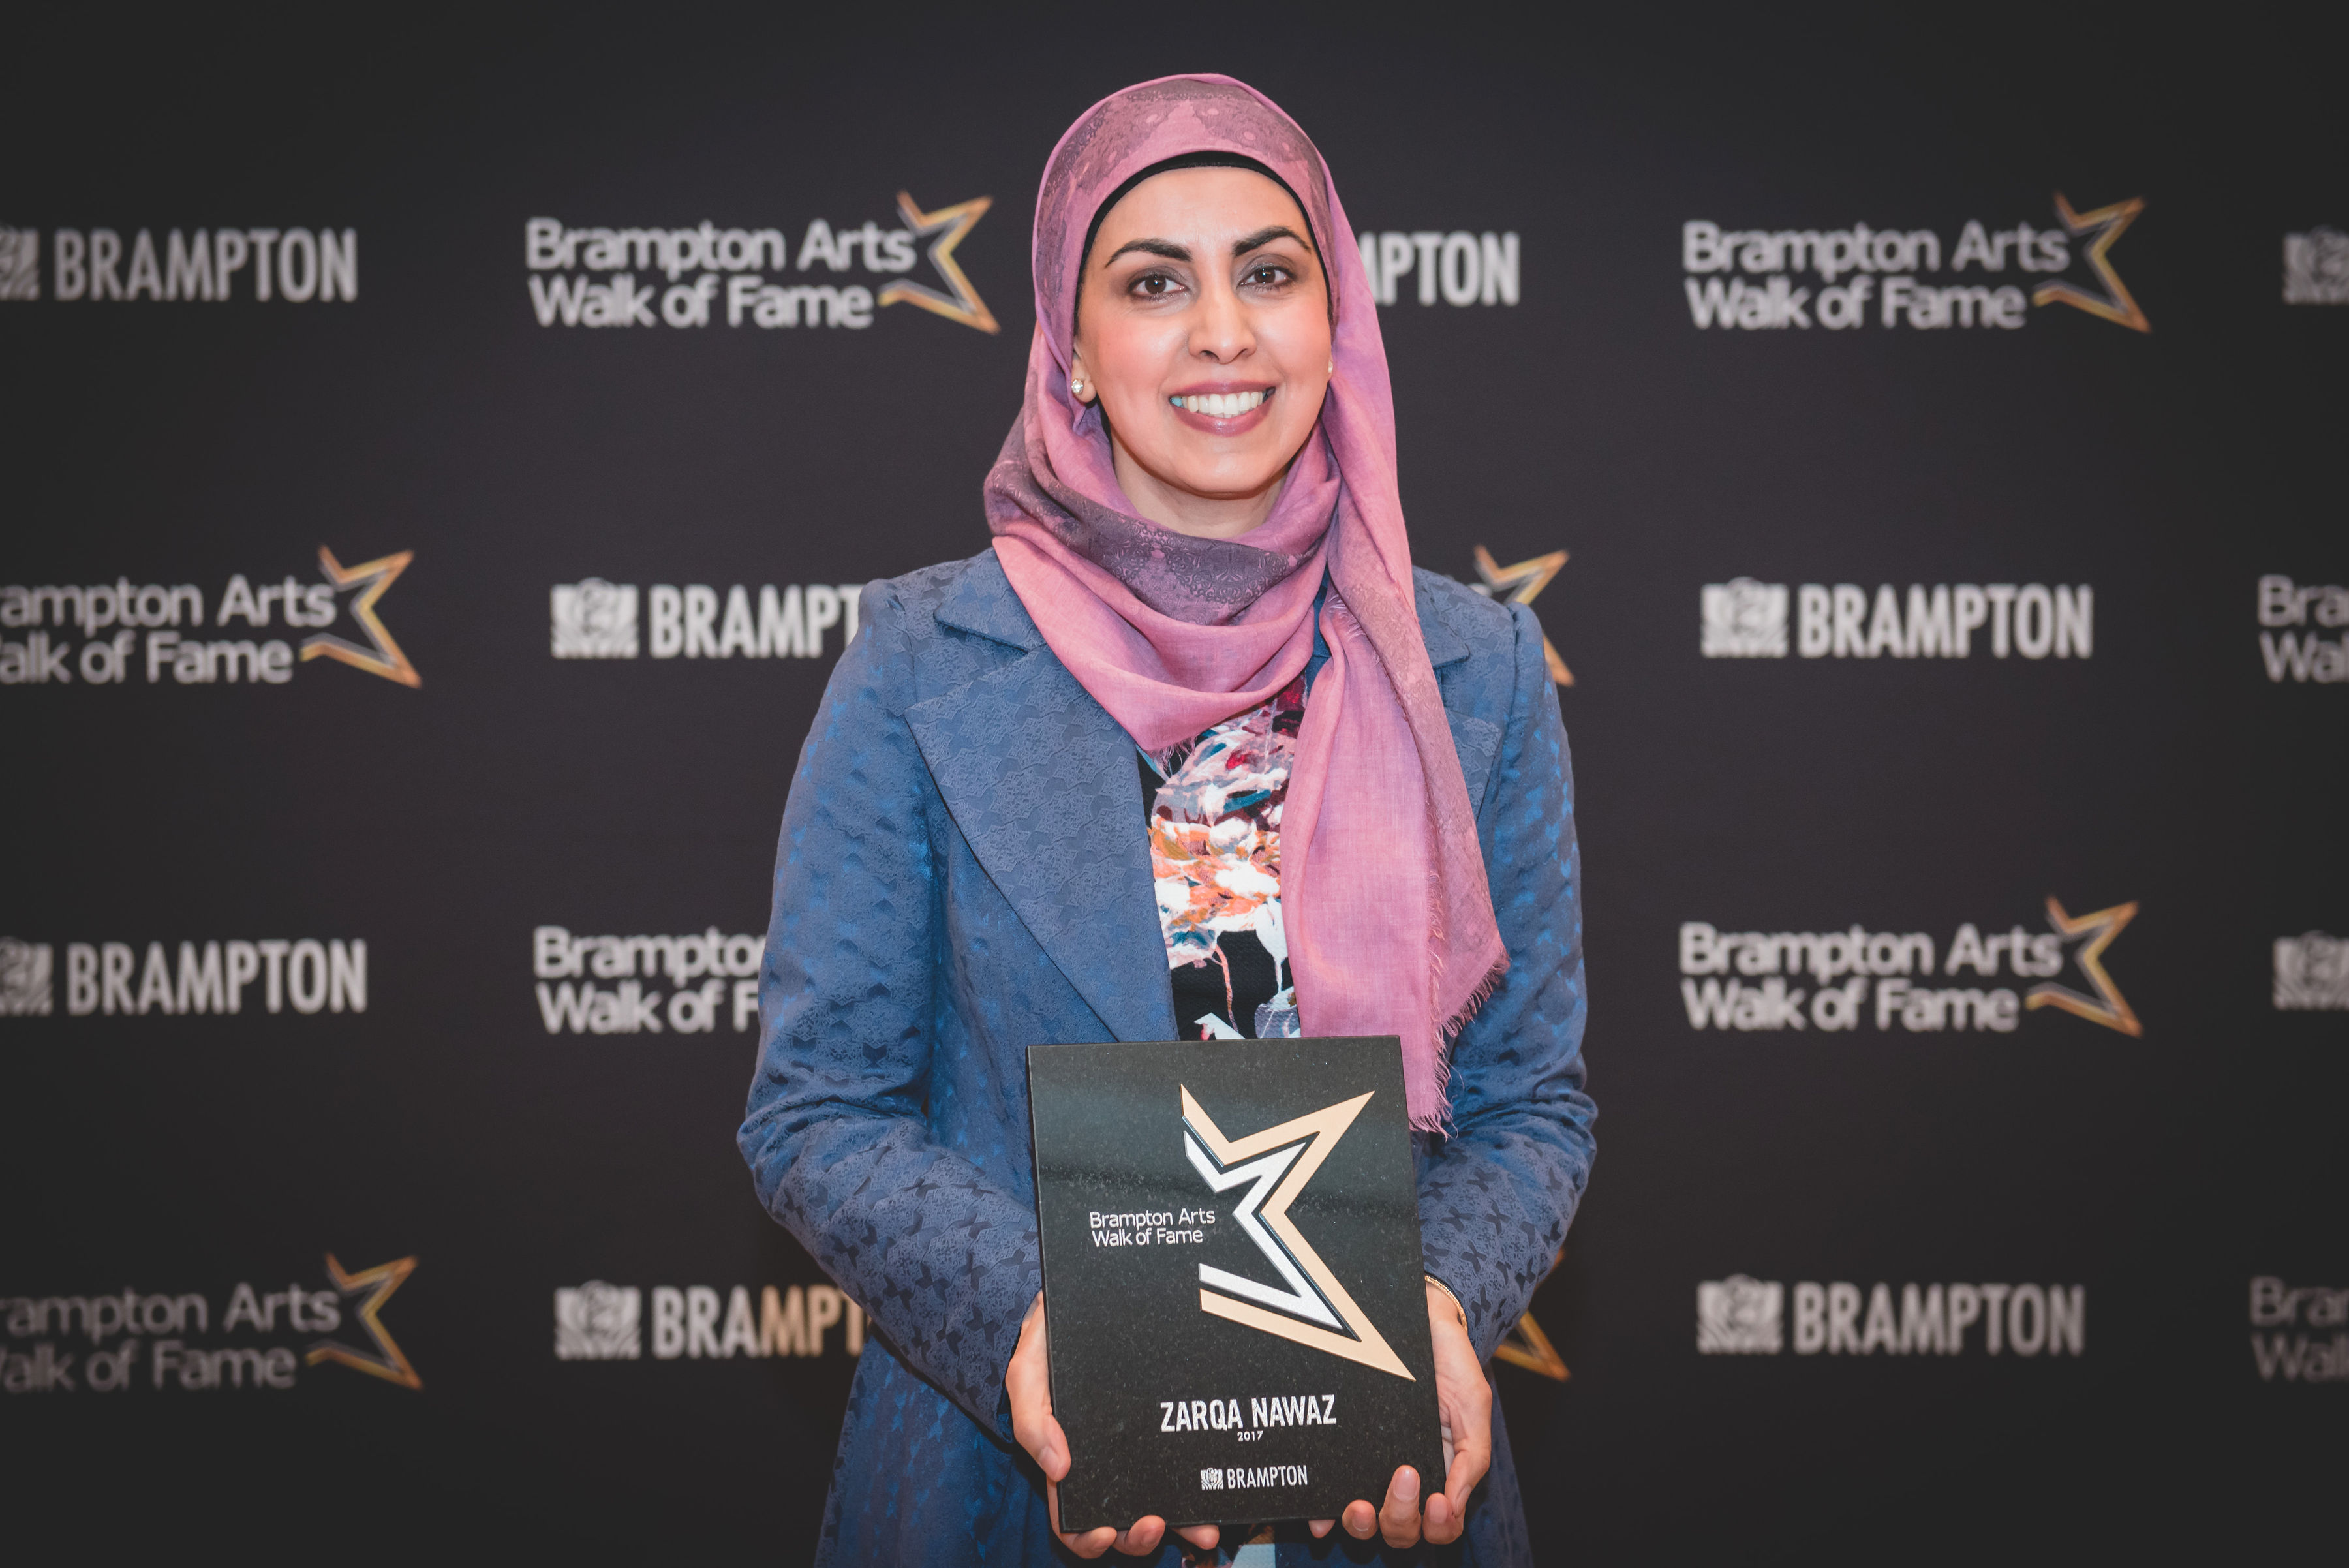 Zarqa Nawaz is inducted into the Brampton Arts Walk of Fame